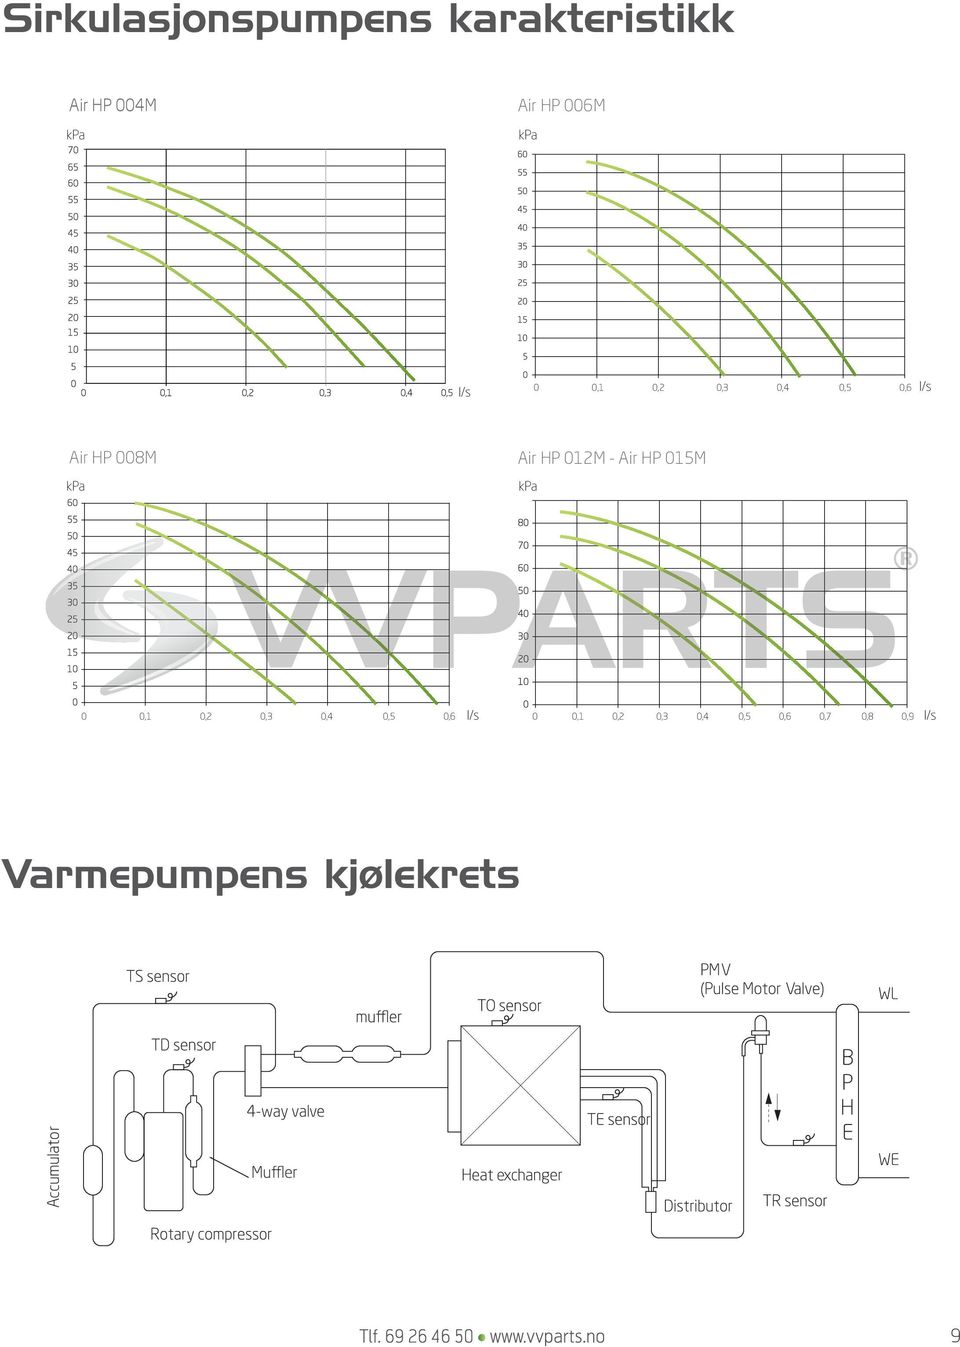 HP 012M - Air HP 015M kpa kpa 0 0,1 0,2 0,3 0,4 0,5 0,6 l/s